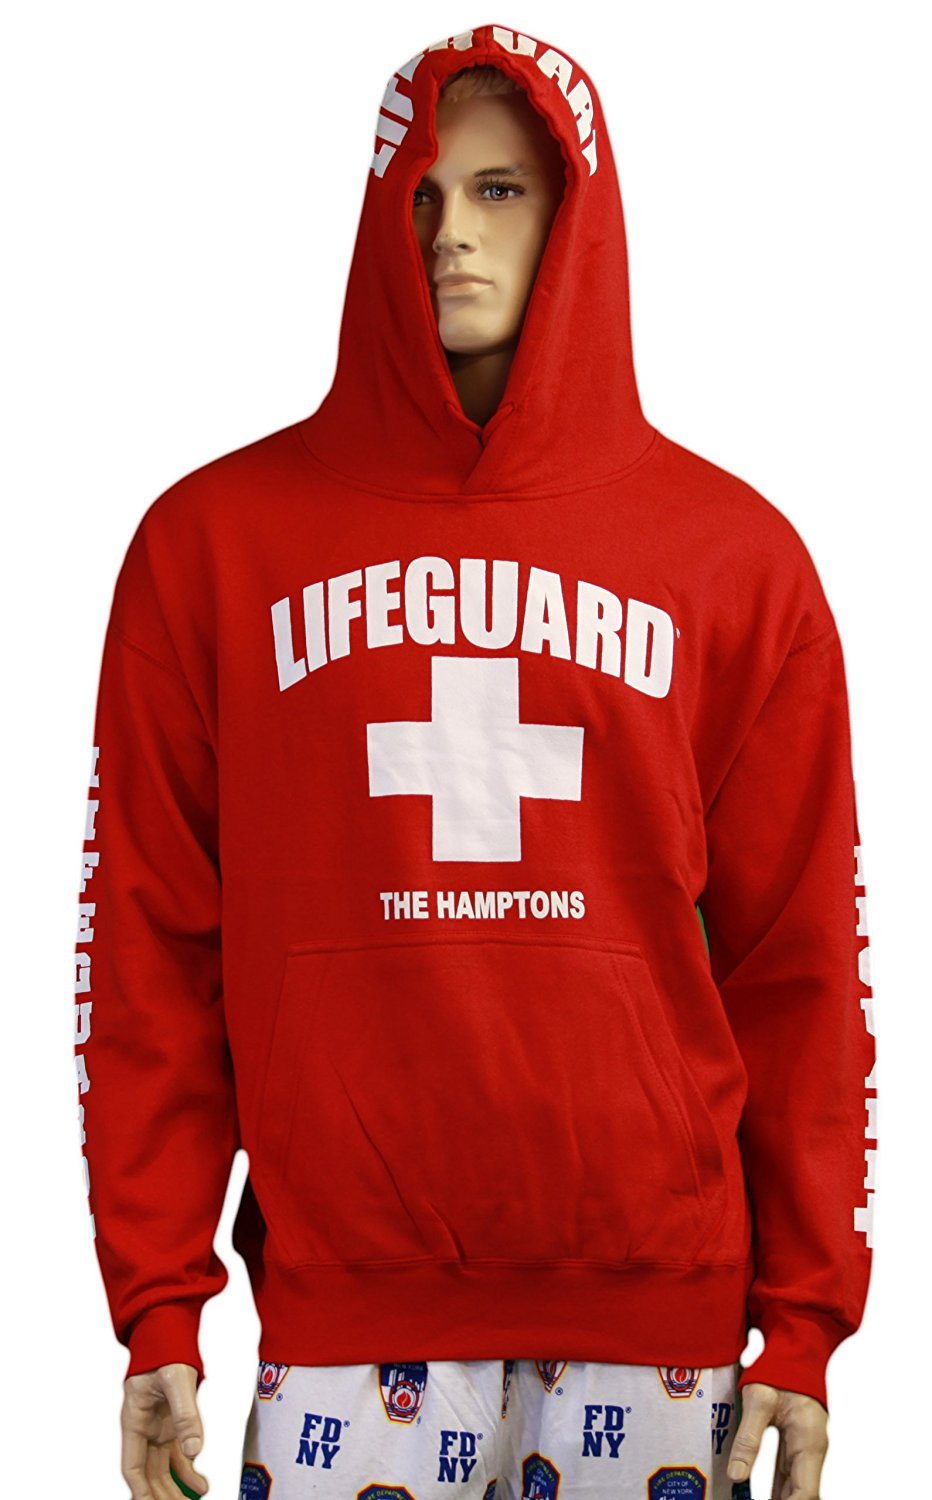 Lifeguard The Hamptons NY Life Guard Sweatshirt Red